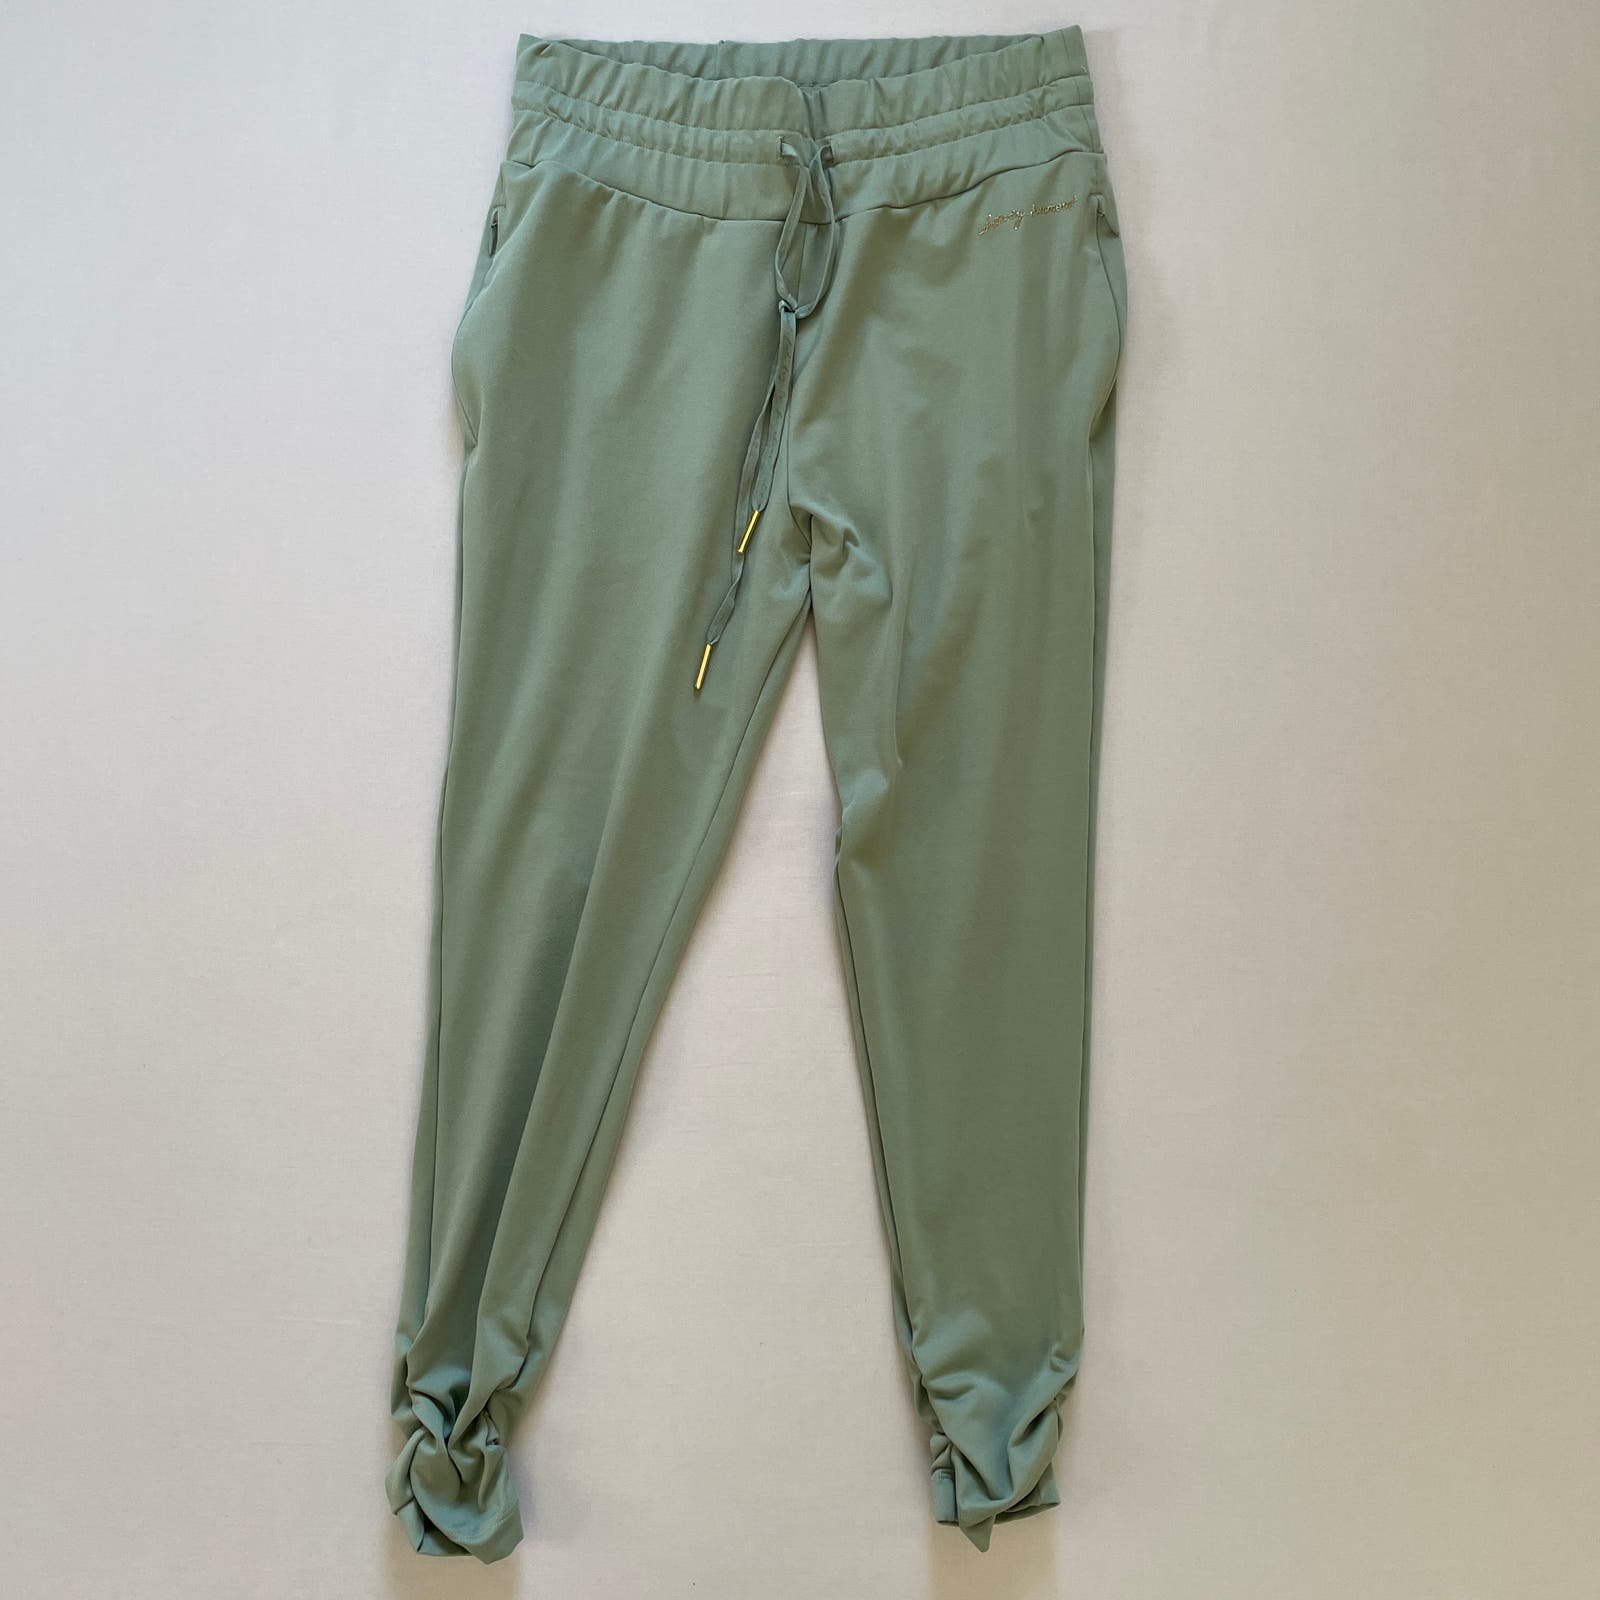 Stylish Gymshark Pants Womens Small Green Whitney Simmo